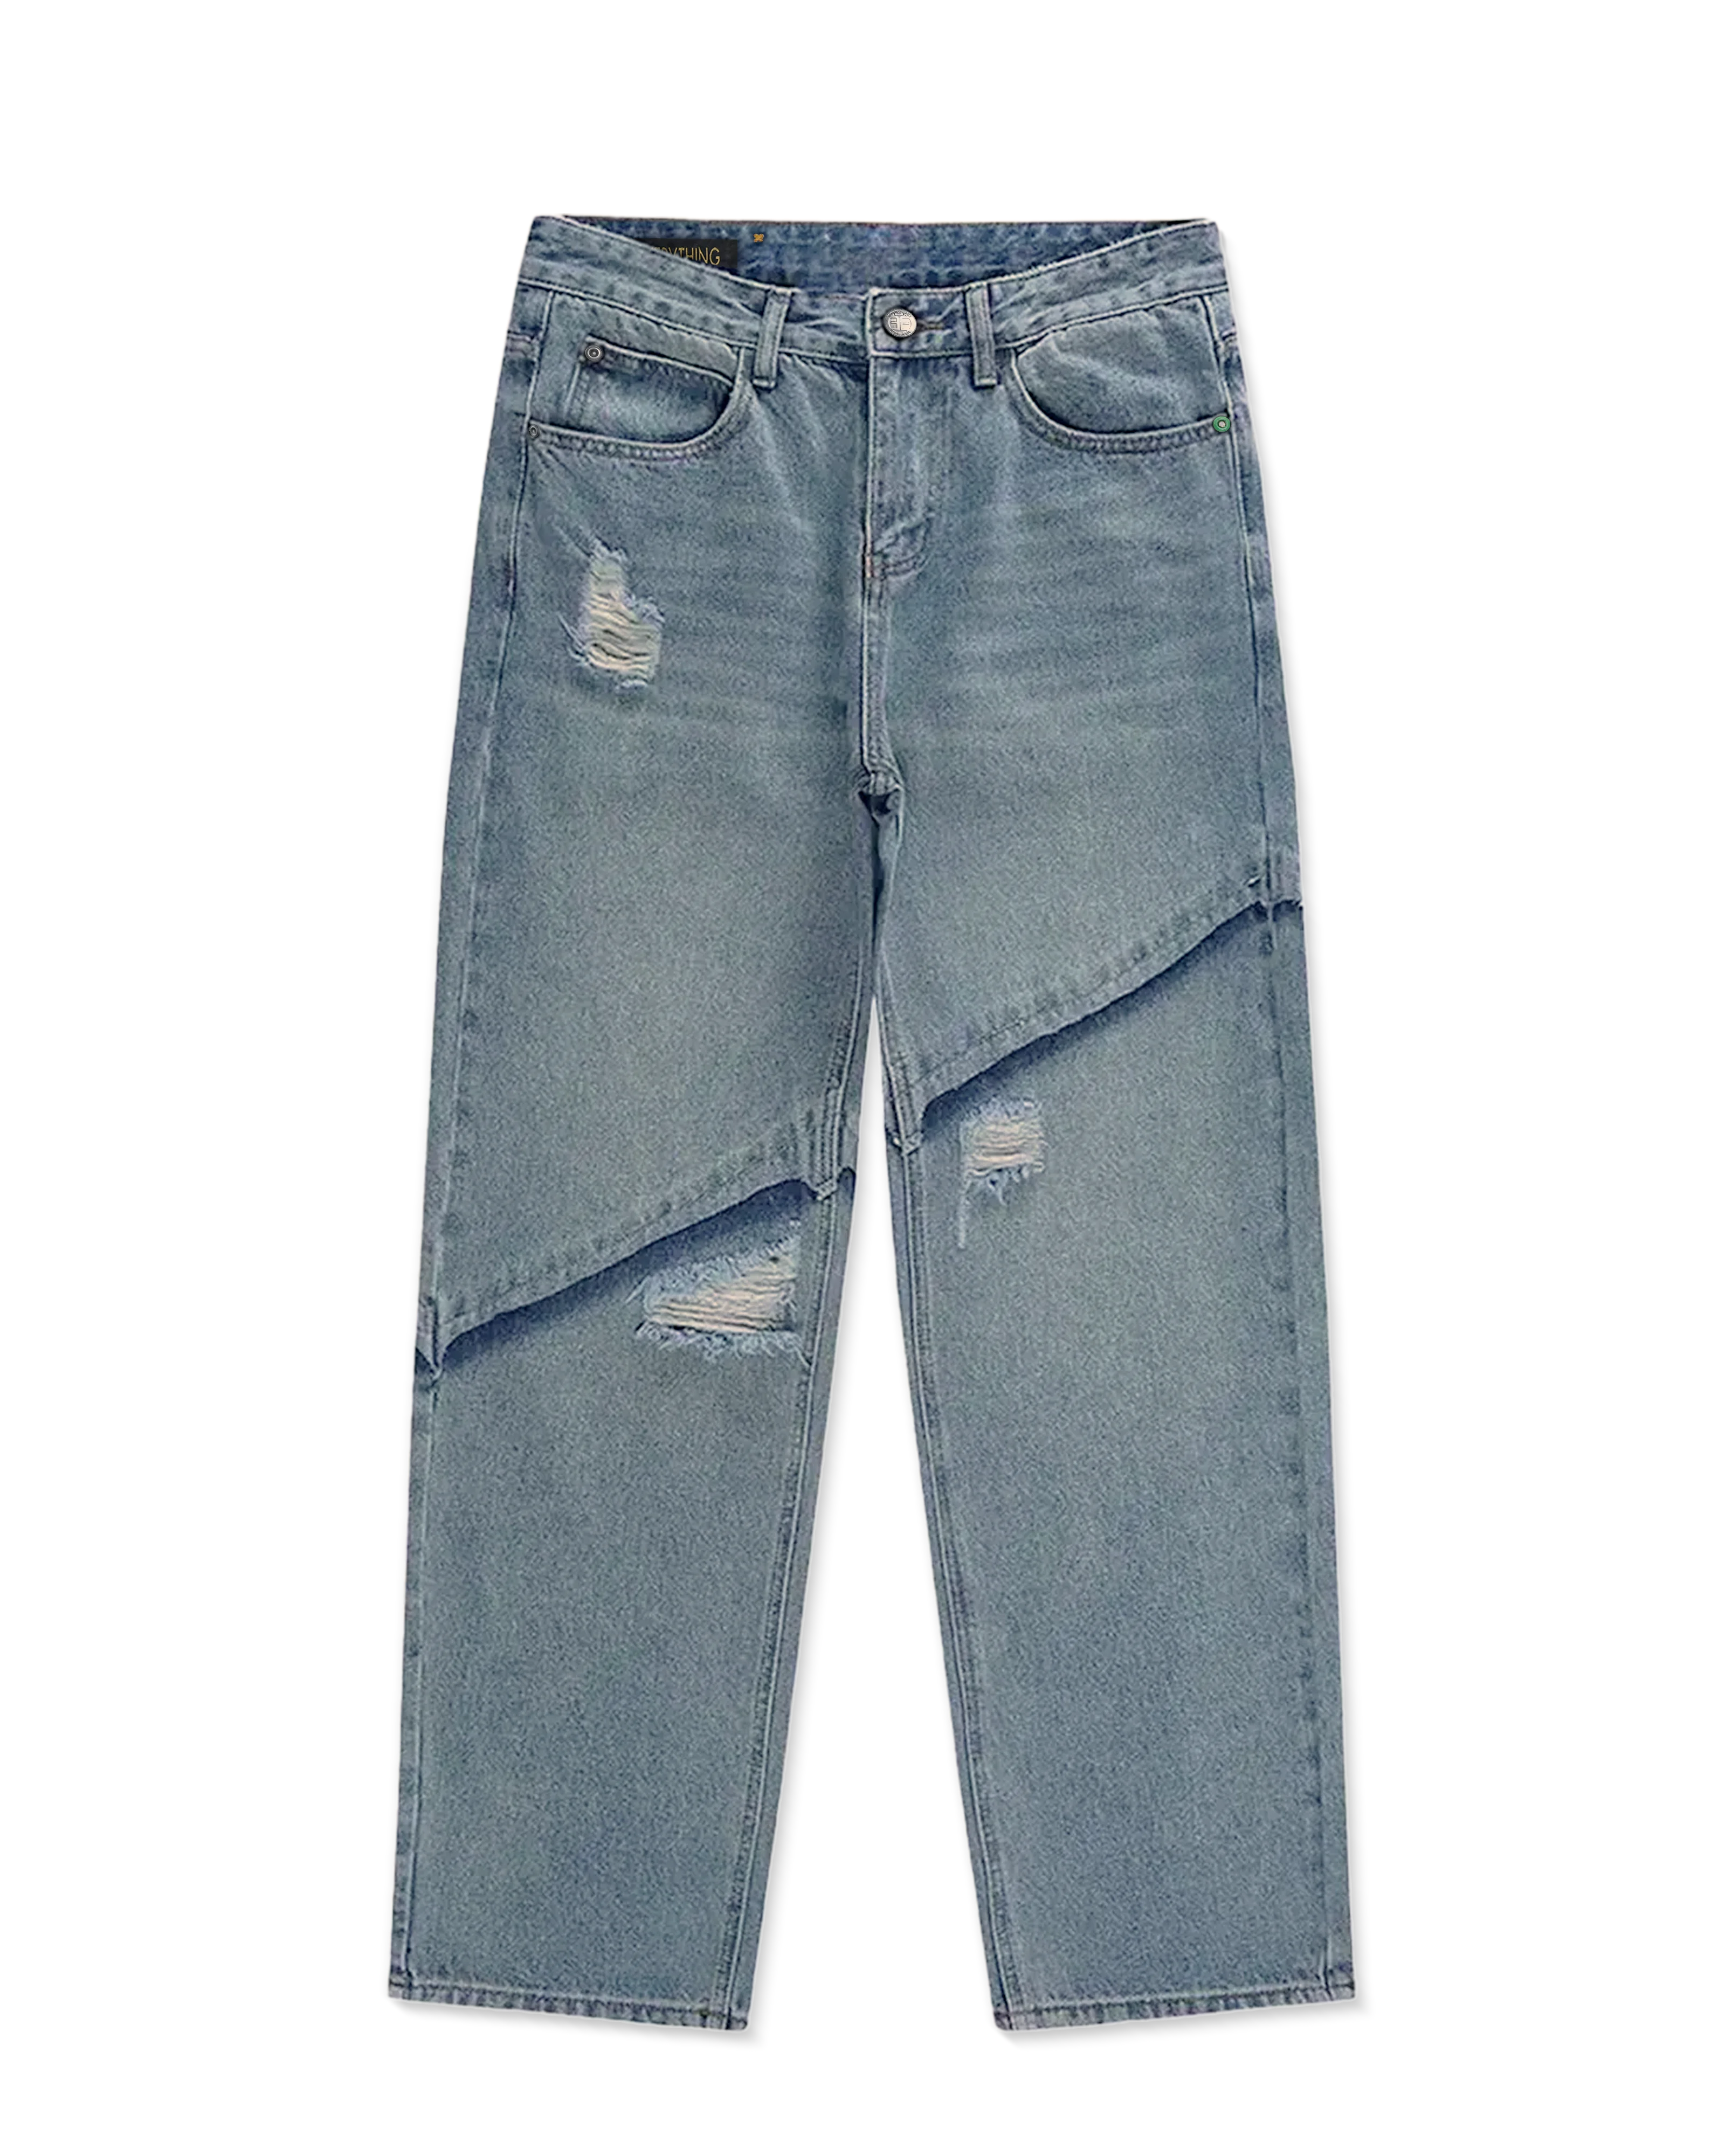 Diagonal sliced jeans